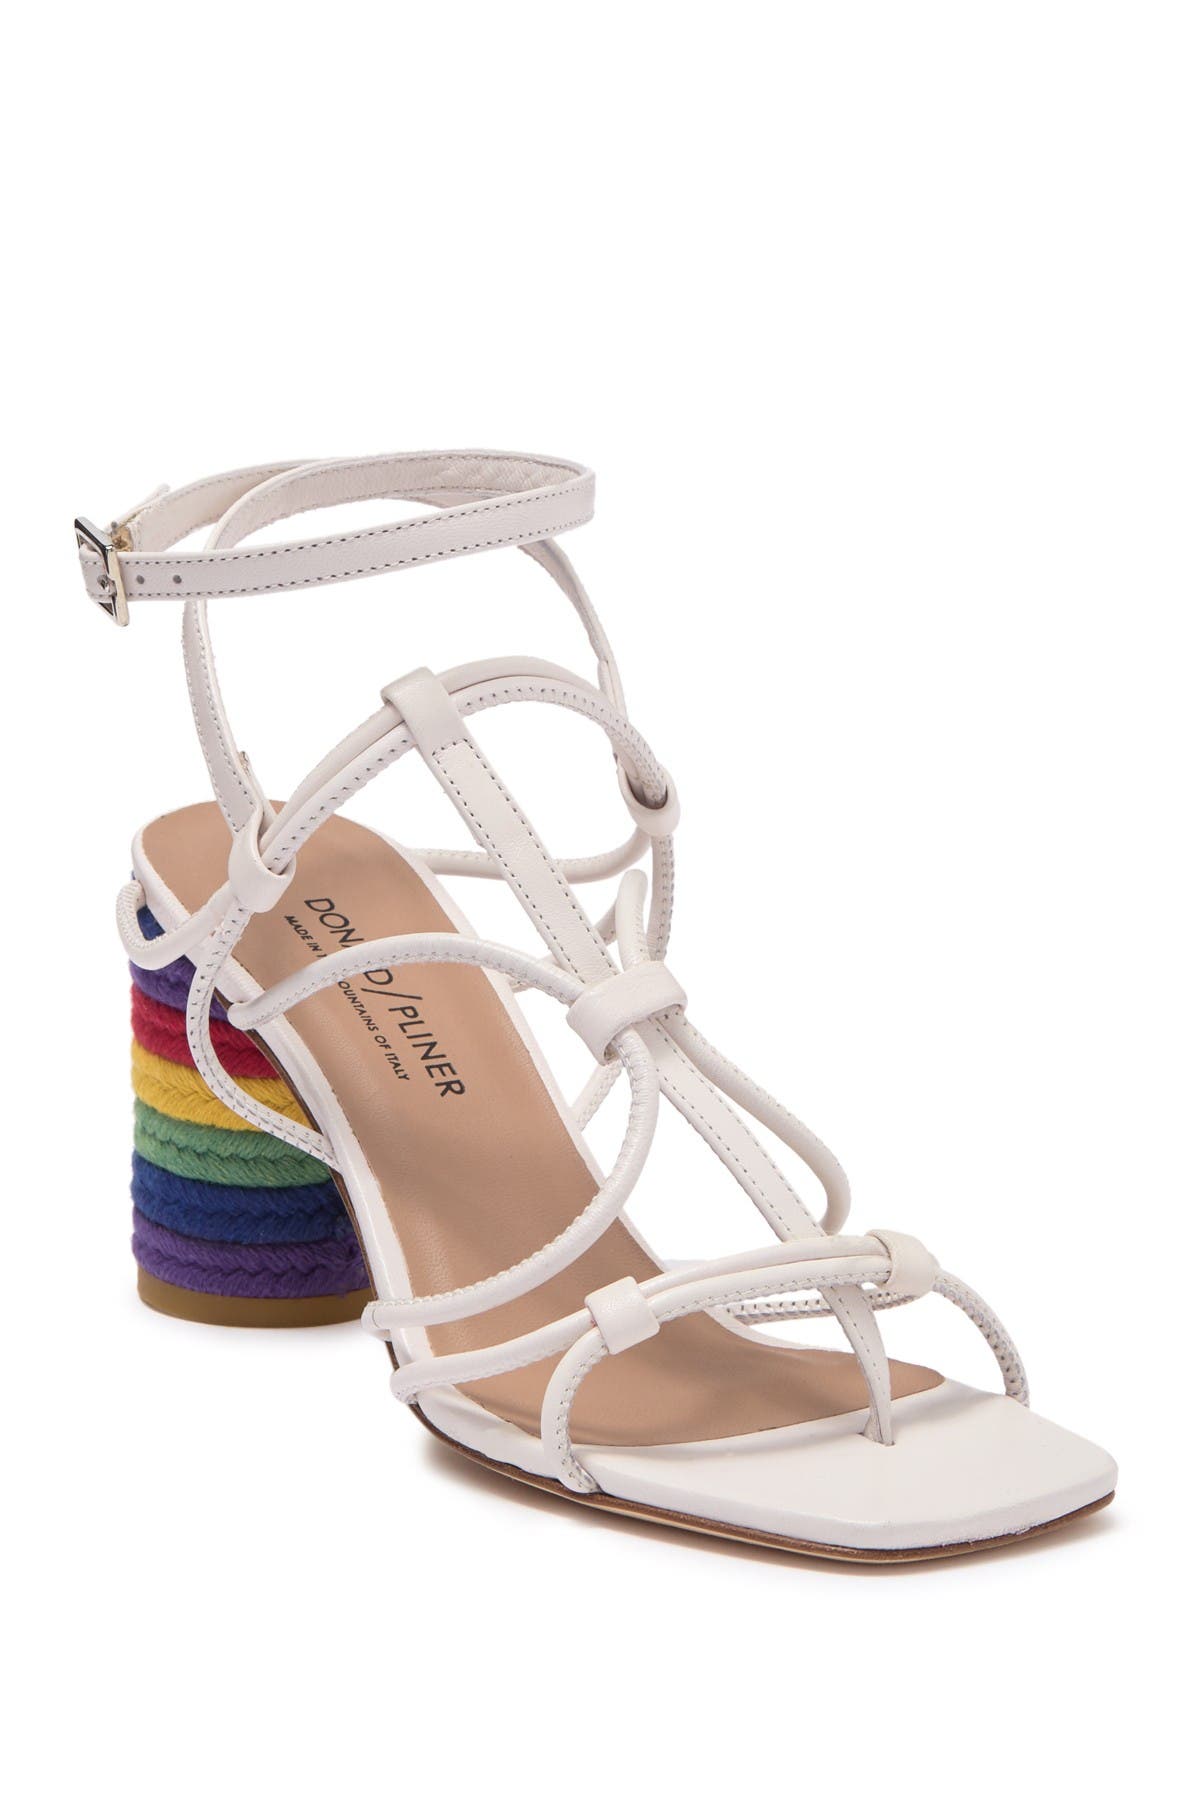 rainbow strappy sandals